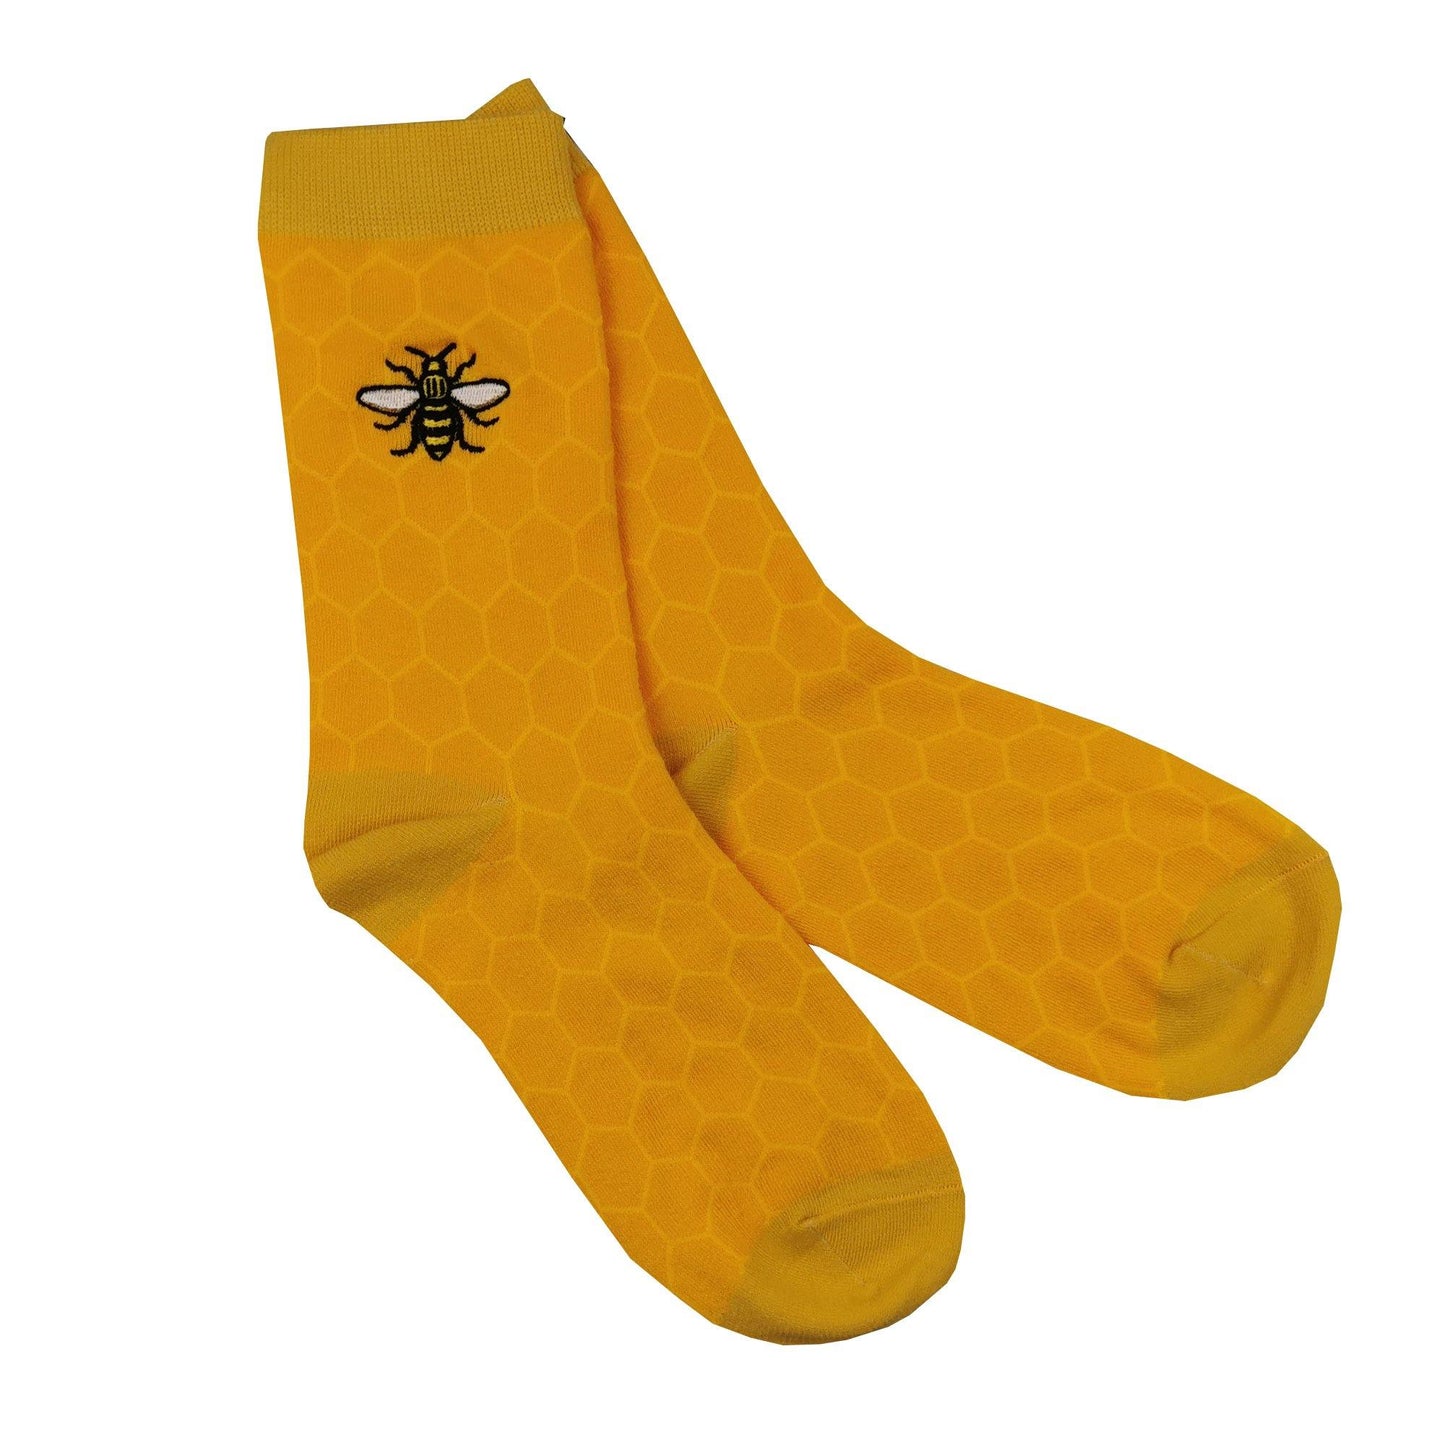 Mustard Honeycomb Bee Socks - The Manchester Shop